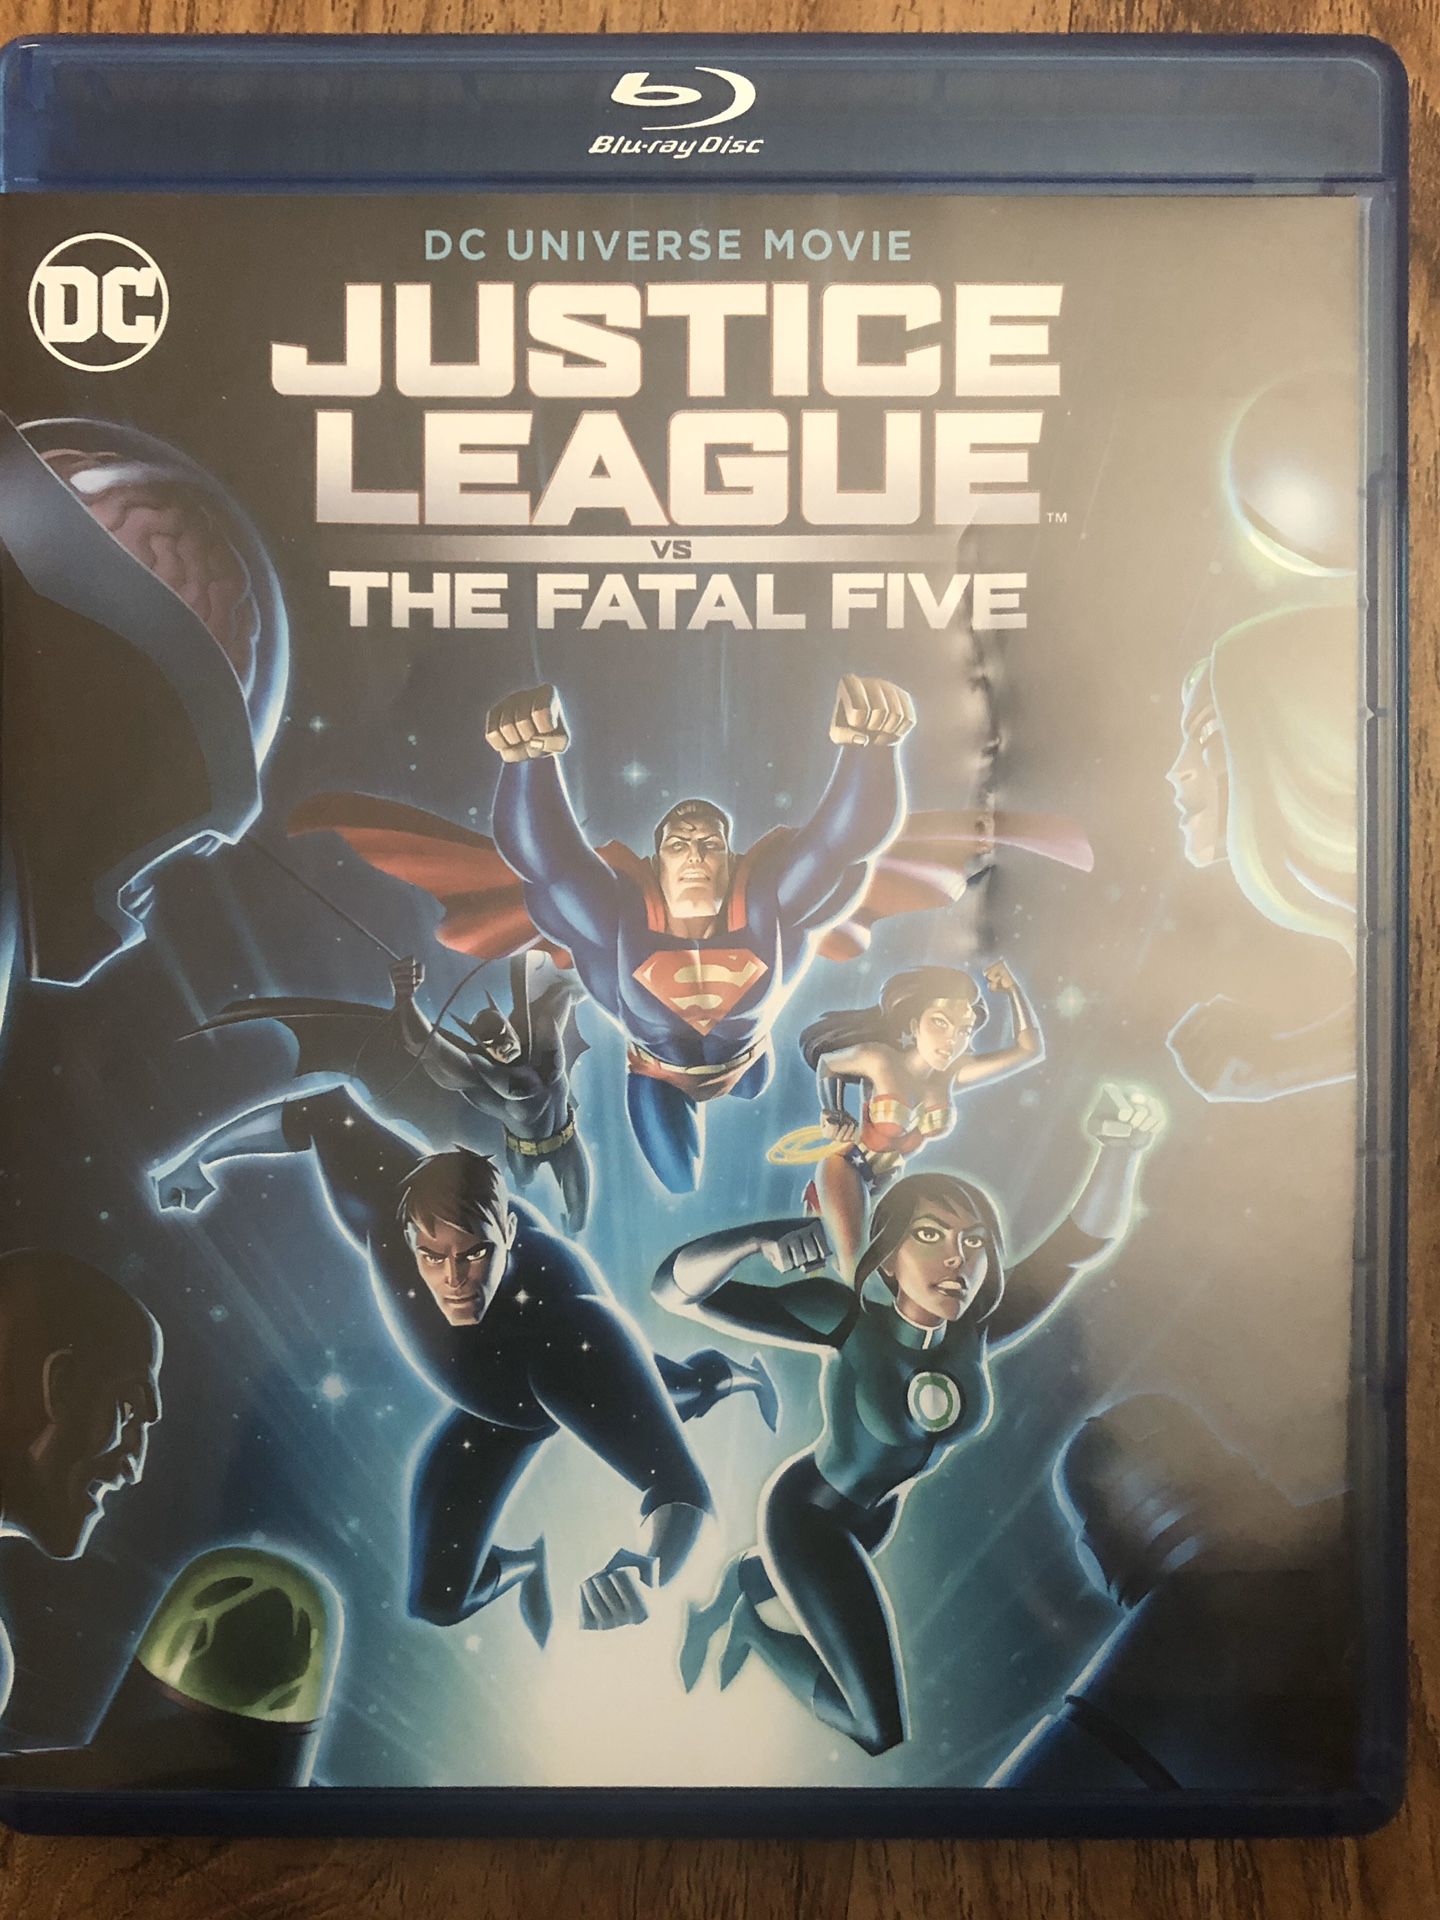 Justice League vs the Fatal Five digital code